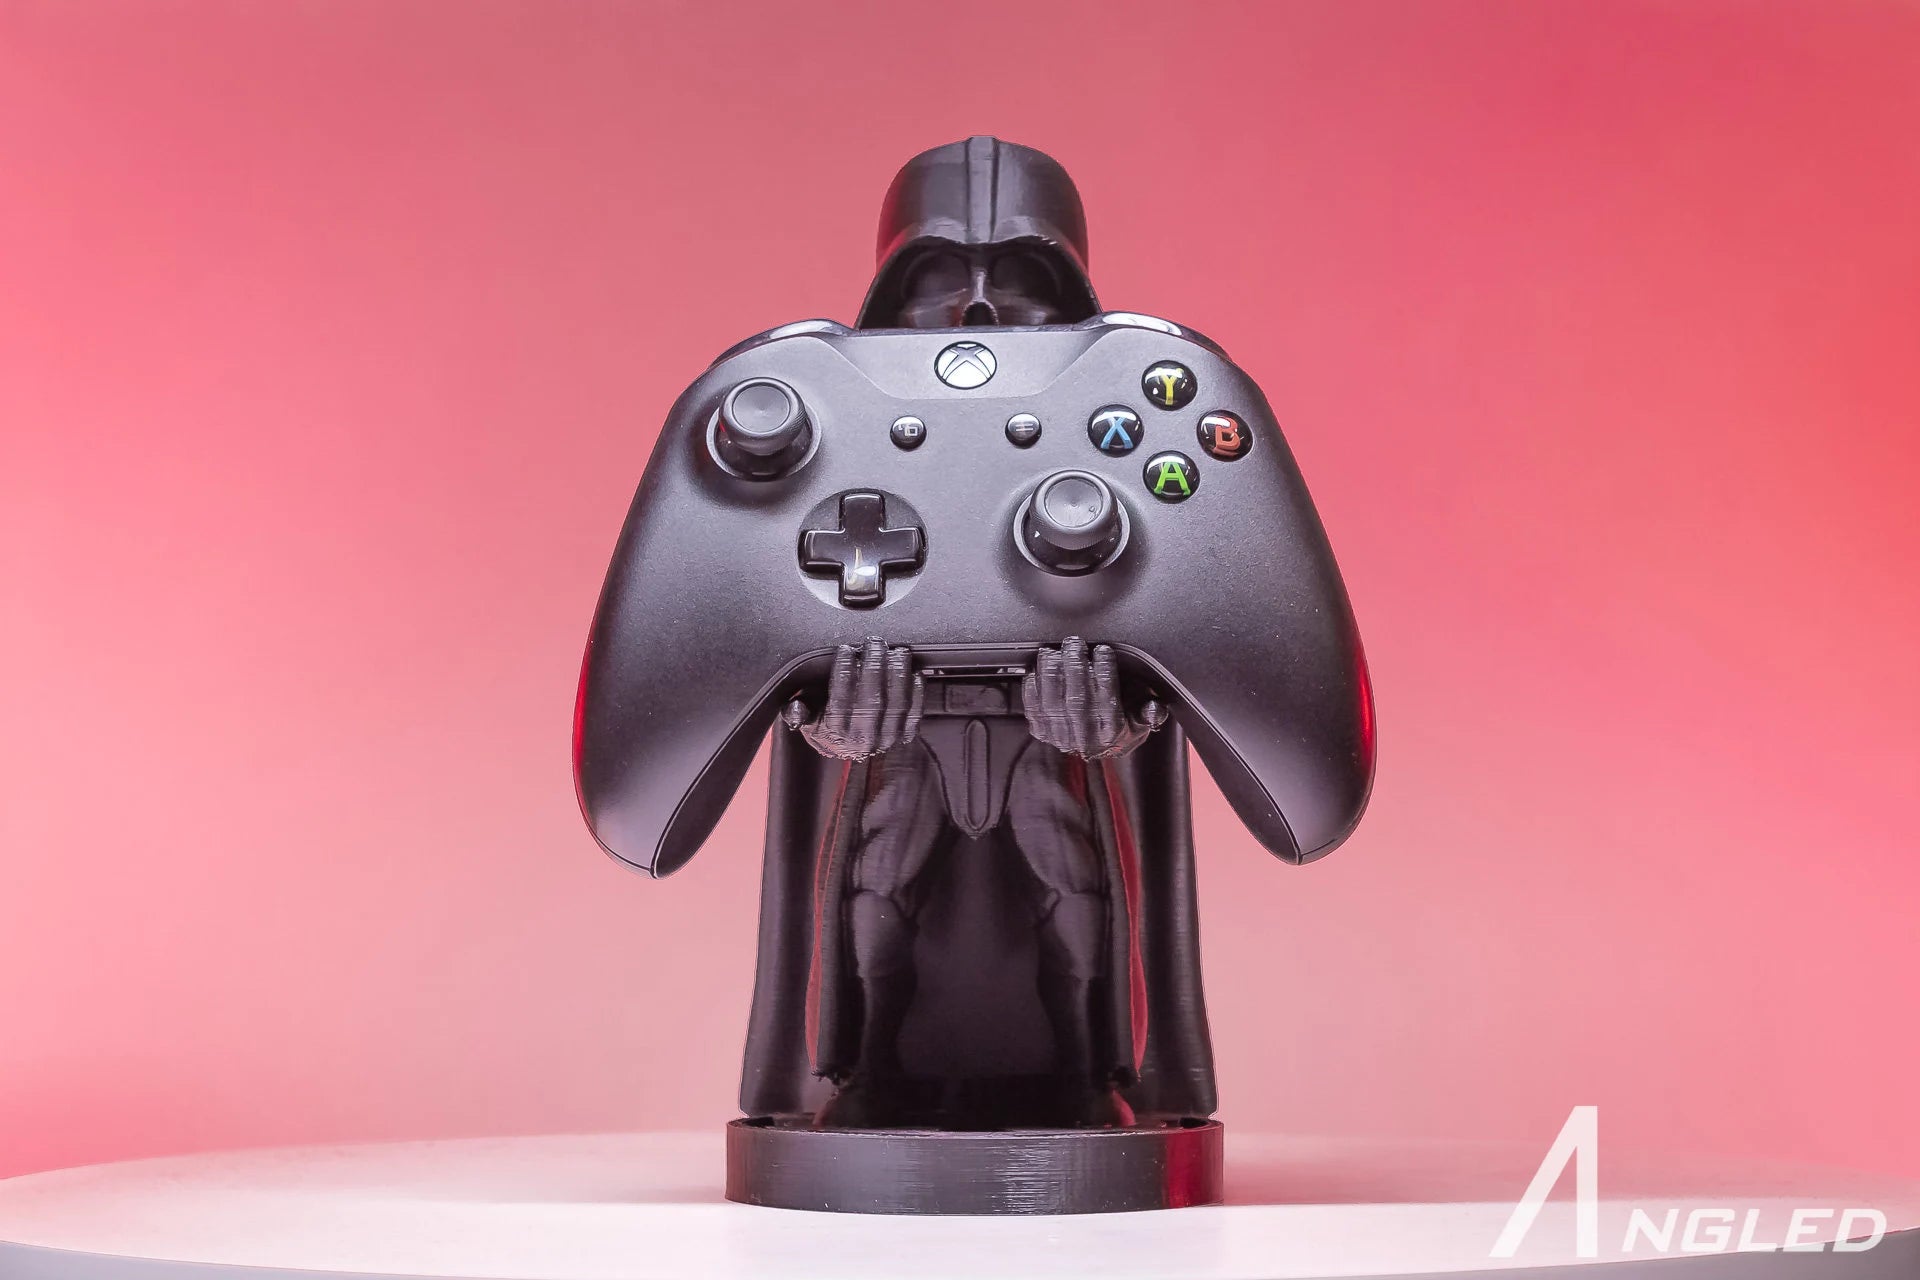 Star Wars Darth Vader Controller Stand | Controller Holder | Phone Holder | Gaming | Decor | Darth Vader Phone Stand | Star Wars